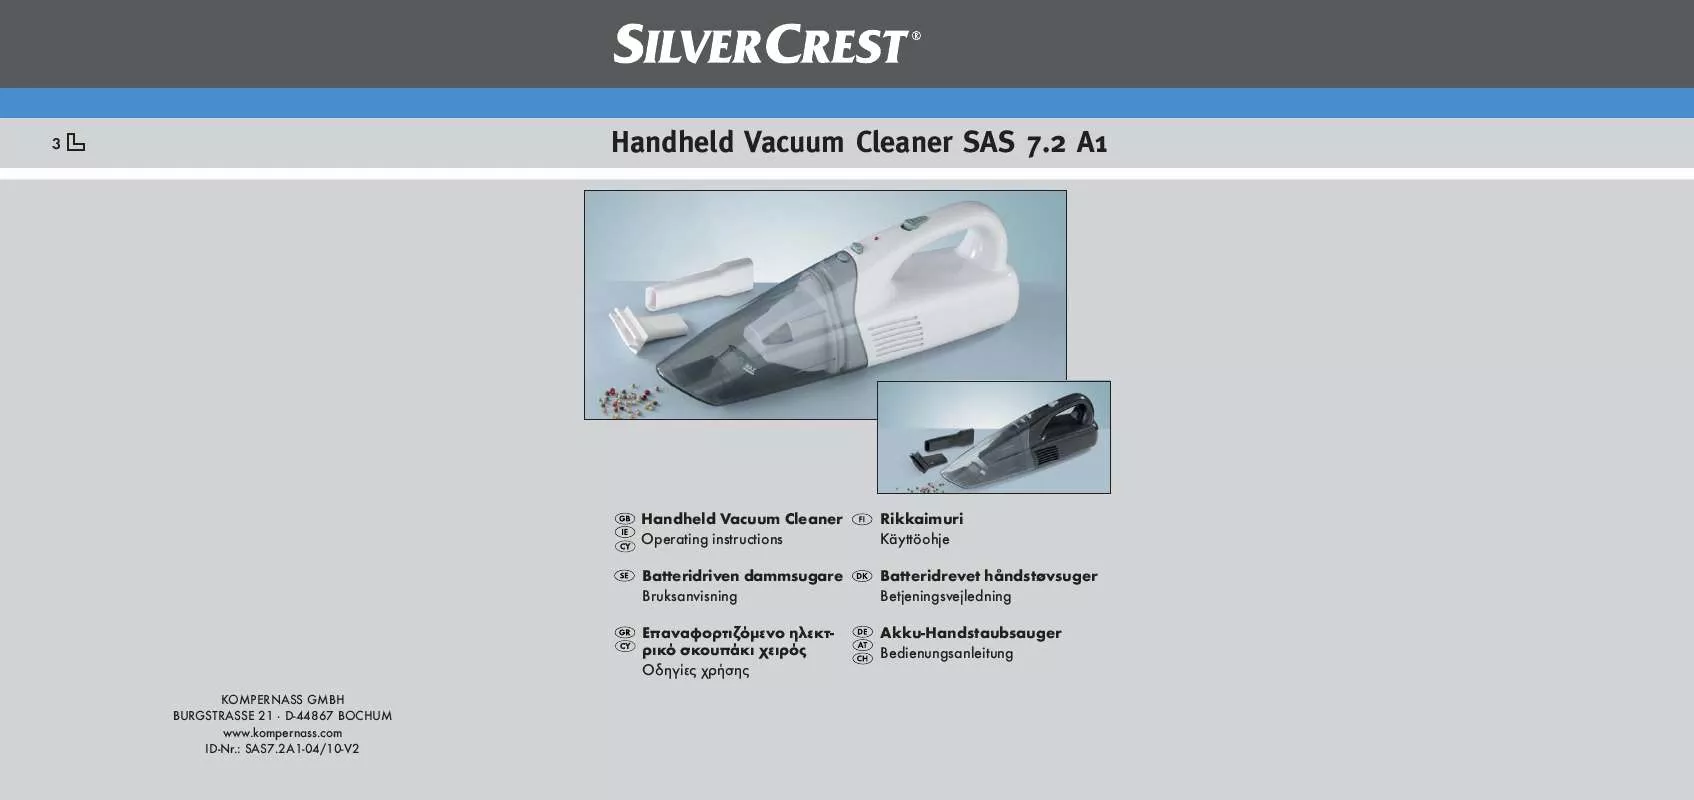 Mode d'emploi SILVERCREST SAS 7.2 A1 HANDHELD VACUUM CLEANER